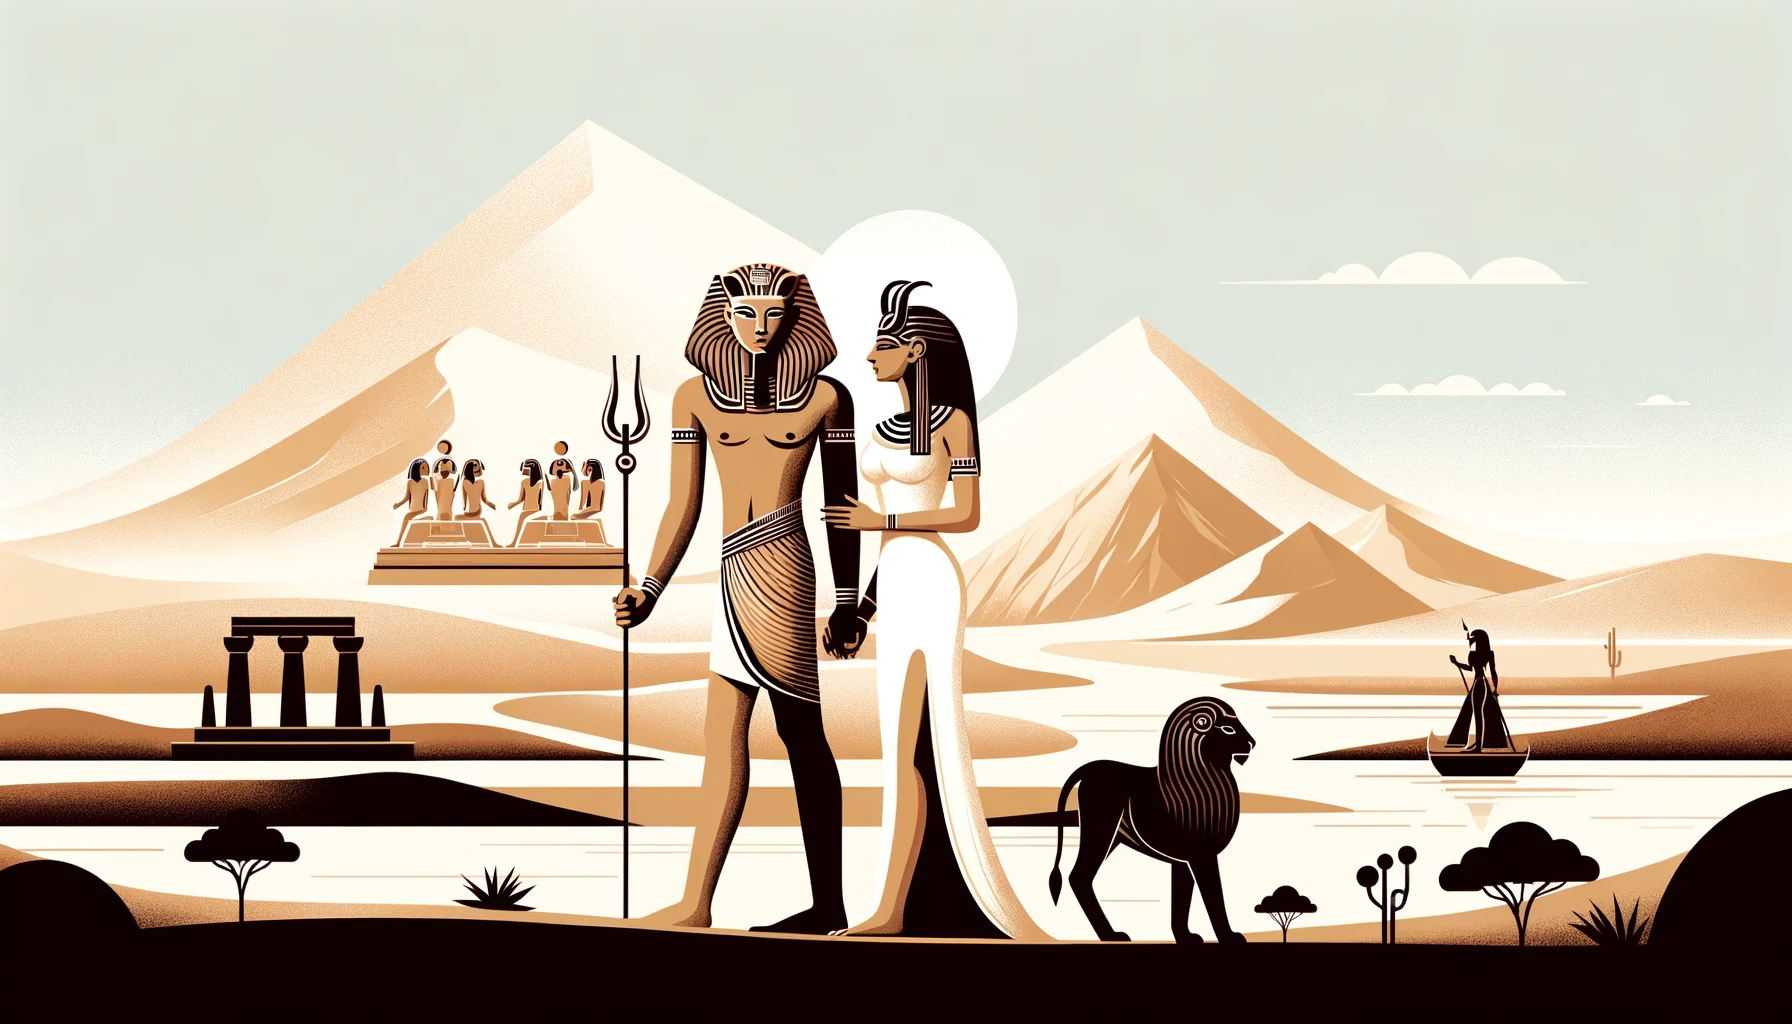 Tefnut vs Khnum: The Battle of Moisture and Creation